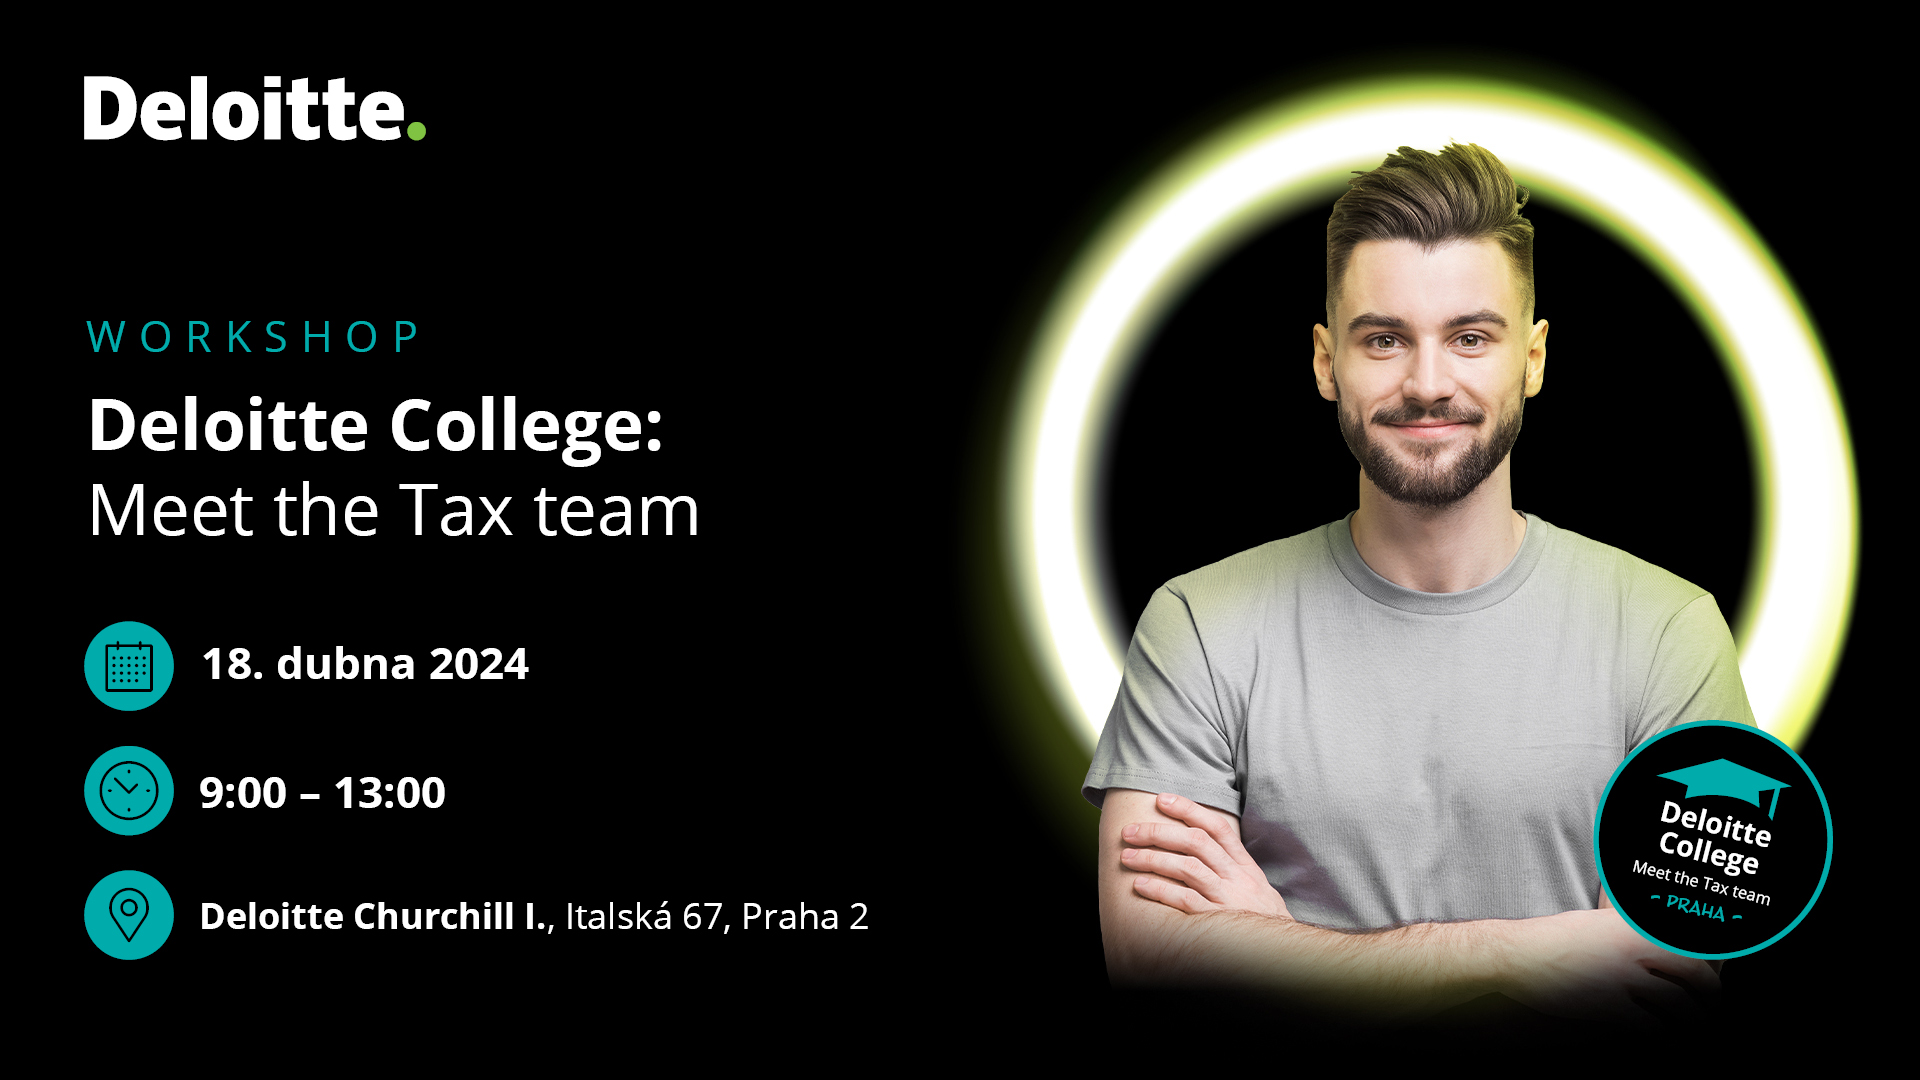 Deloitte College: Meet the Tax team